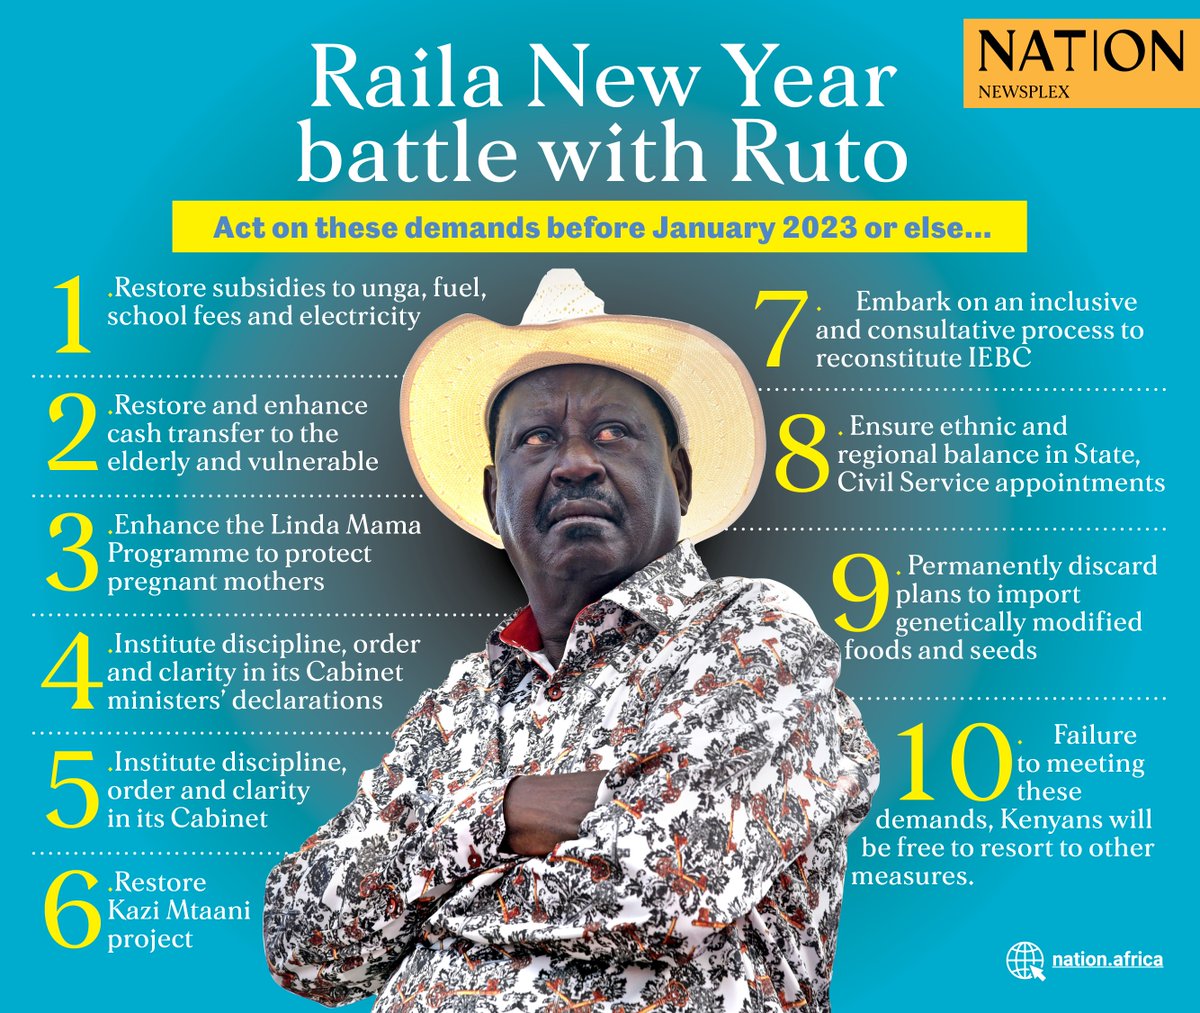 Raila New Year battle with Ruto 
#NationNewsplex